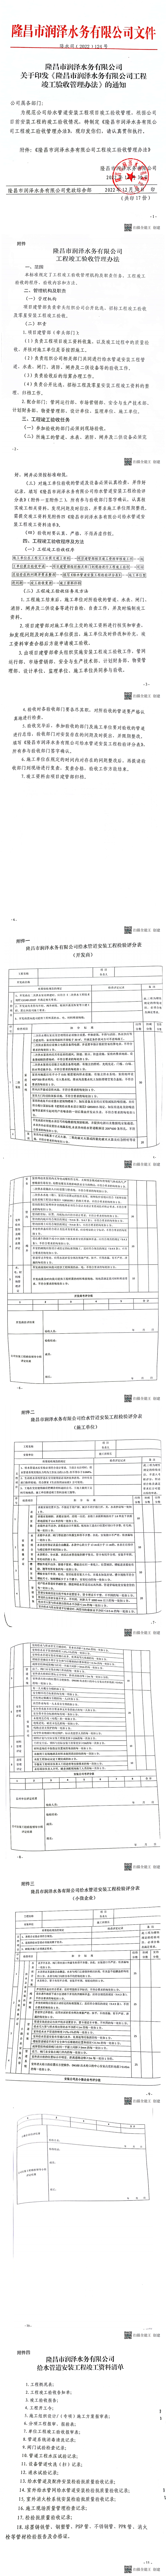 B7-3竣工验收管理办法制度_00(1).png